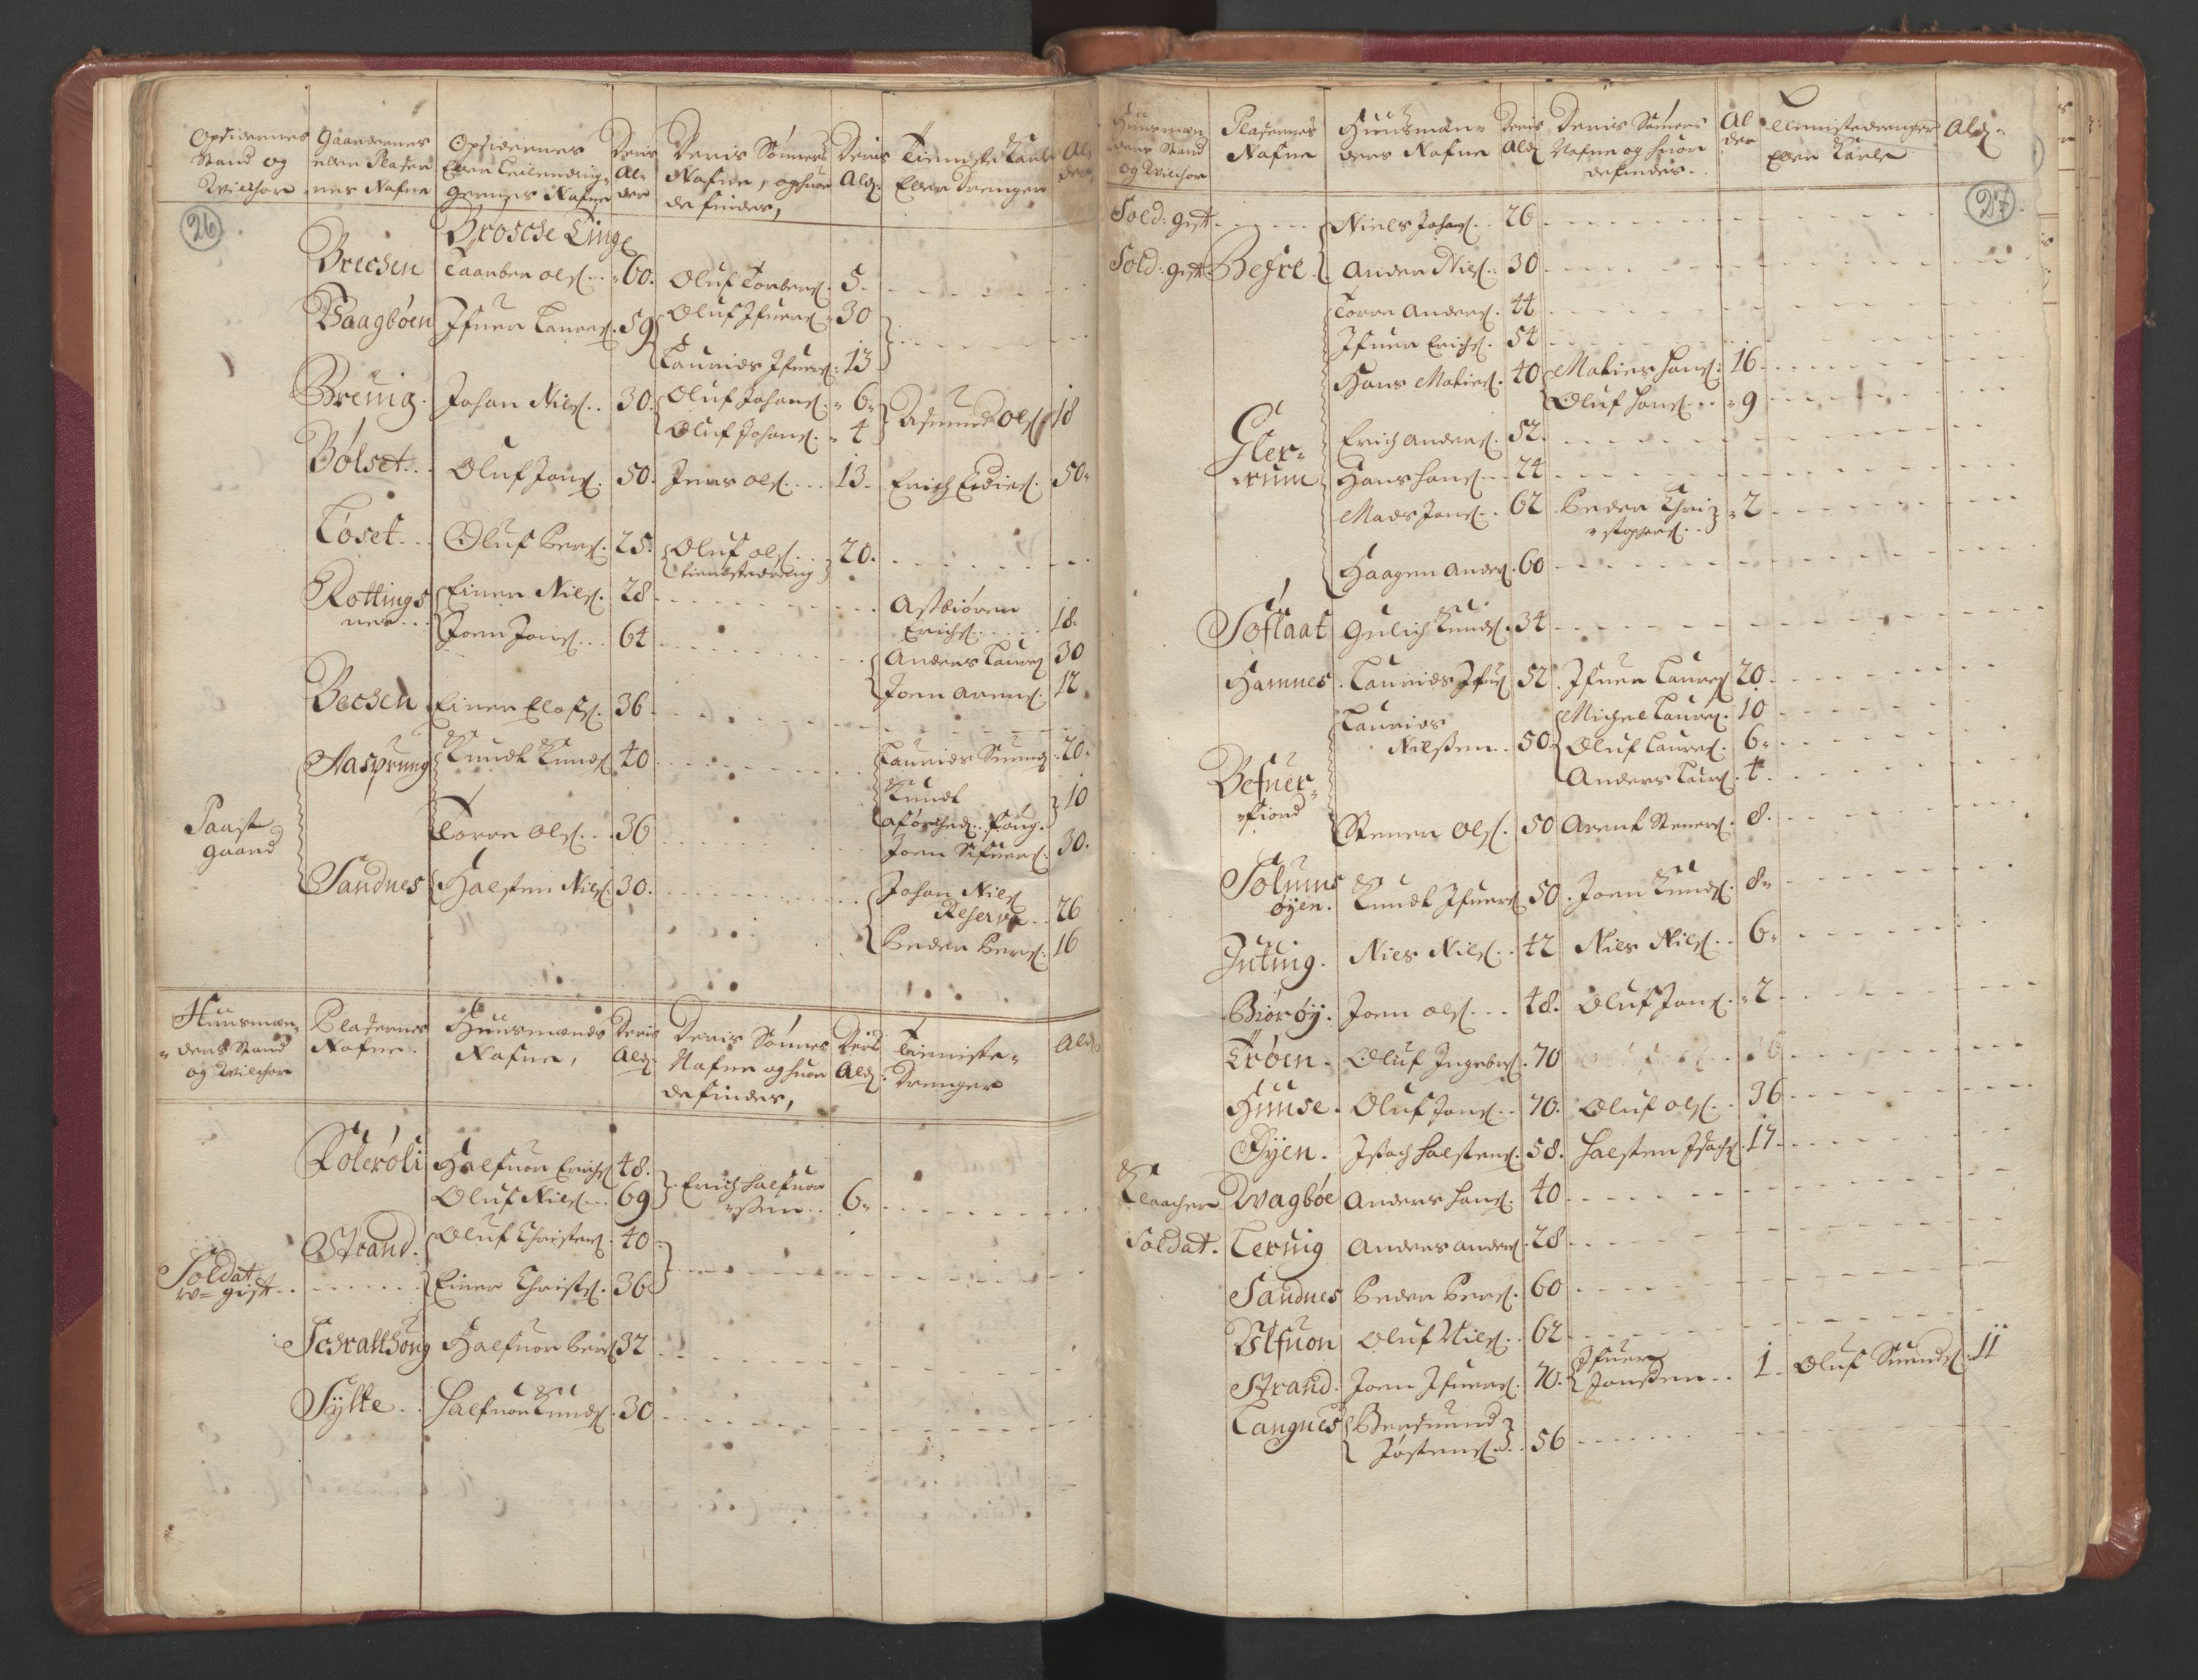 RA, Manntallet 1701, nr. 11: Nordmøre fogderi og Romsdal fogderi, 1701, s. 26-27